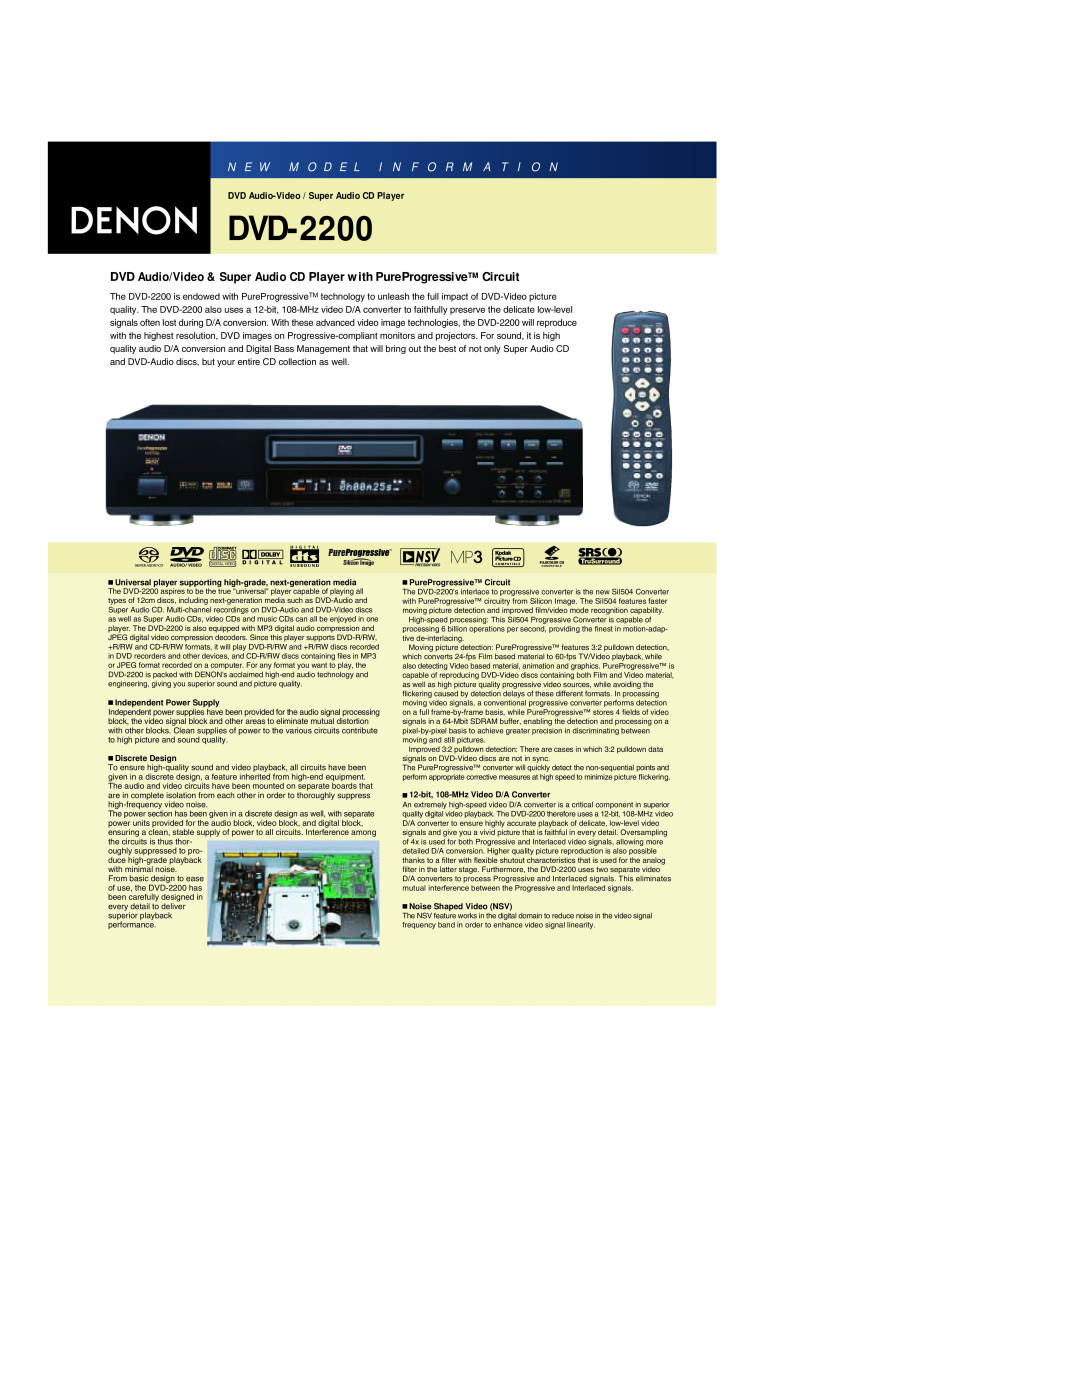 Denon DVD-2200 manual N E W M O D E L I N F O R M A T I O N, DVD Audio-Video / Super Audio CD Player 